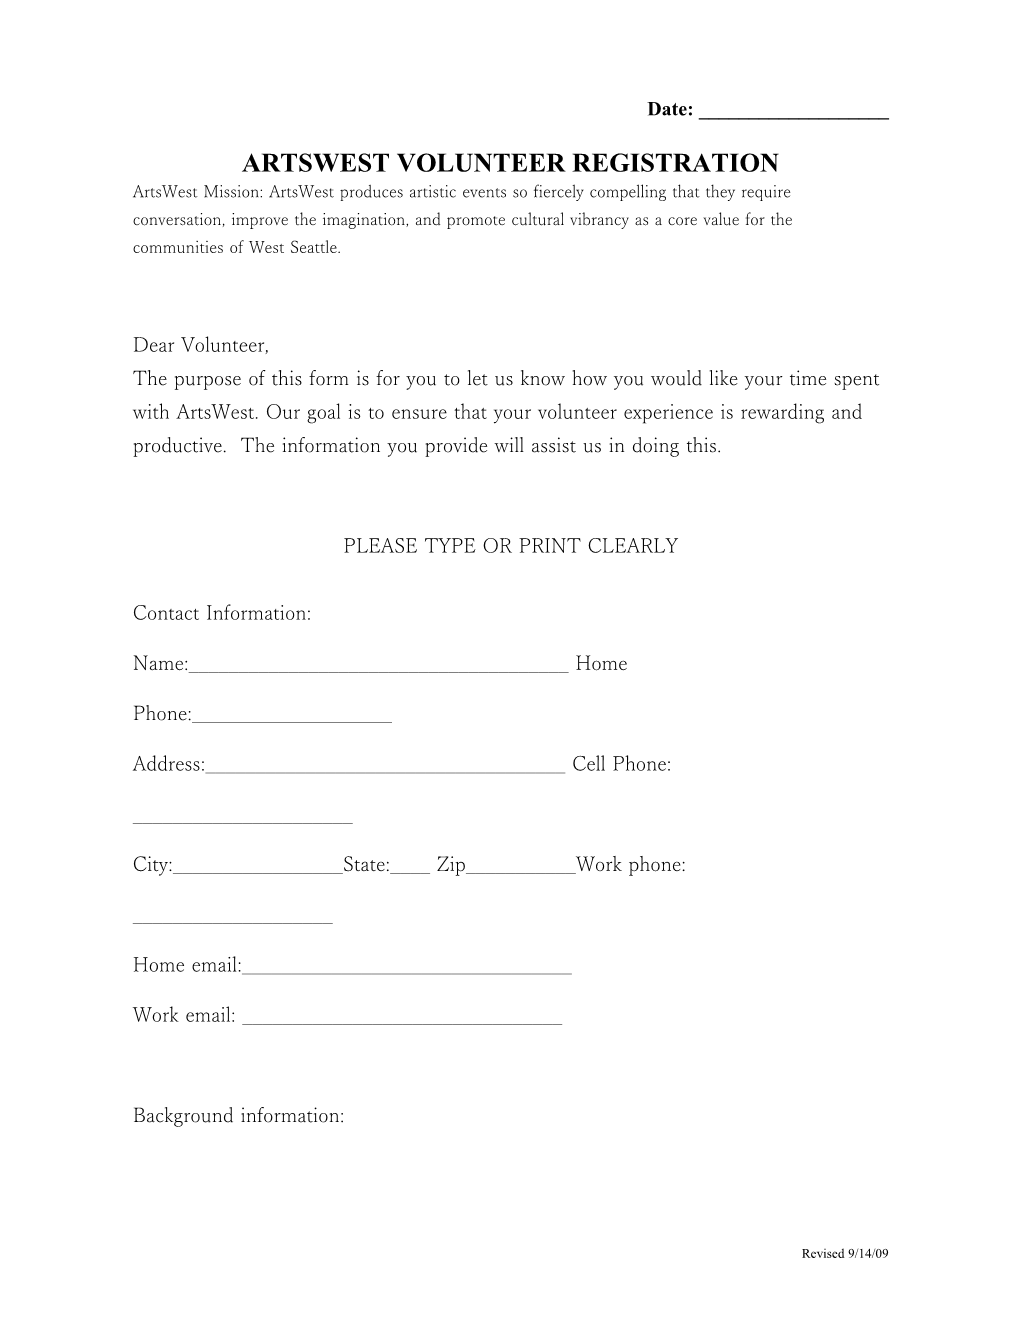 Artswest Volunteer Registration